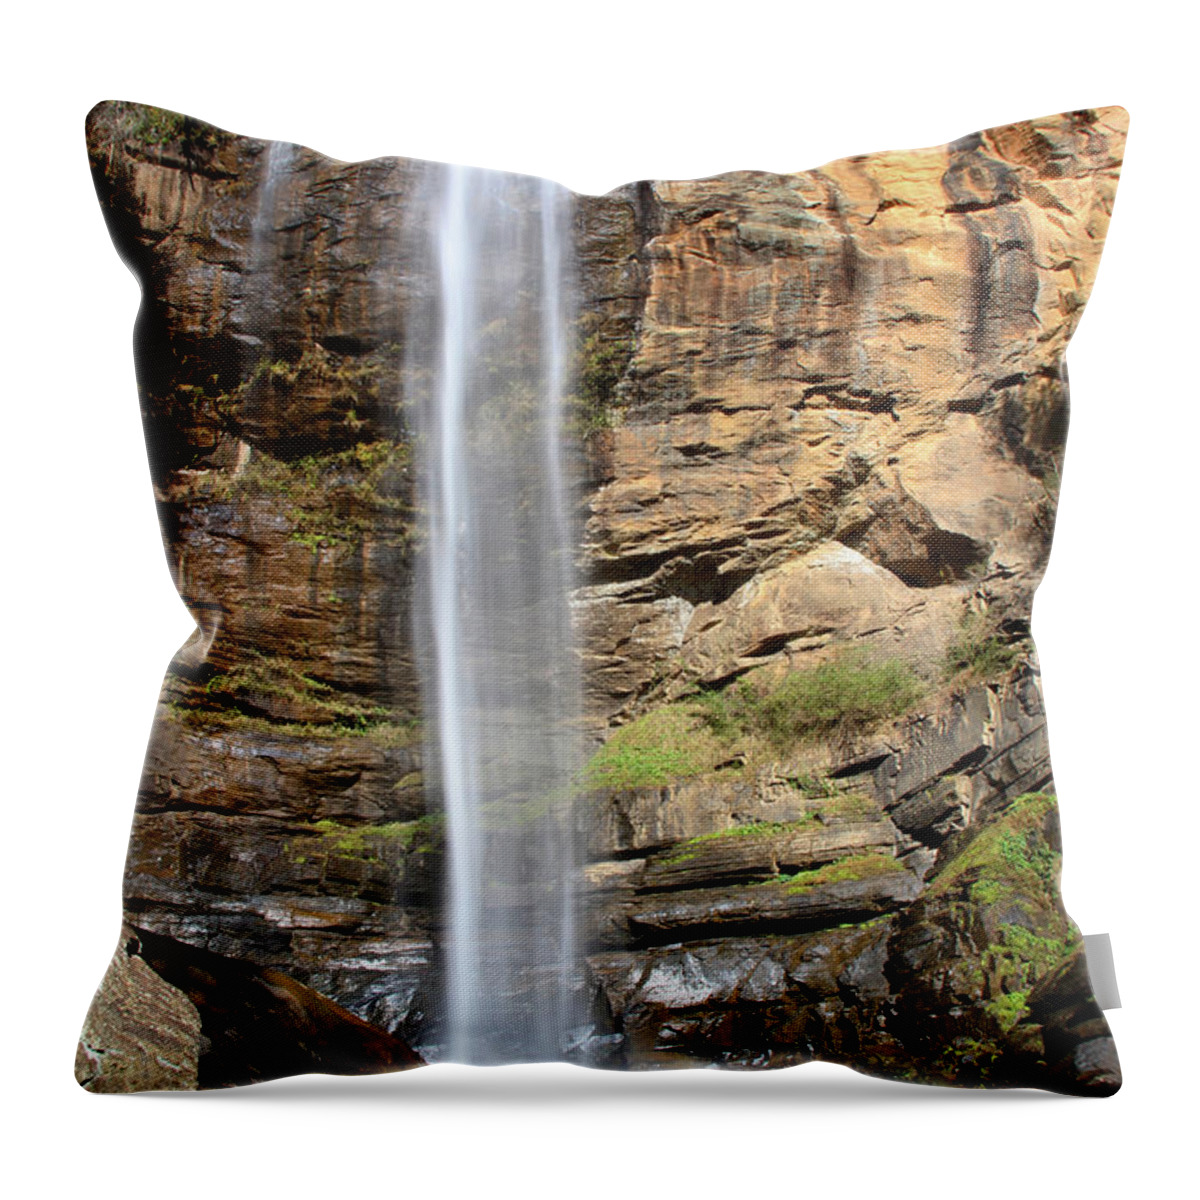 Waterfall Throw Pillow featuring the photograph Toccoa Falls - Georgia by Richard Krebs